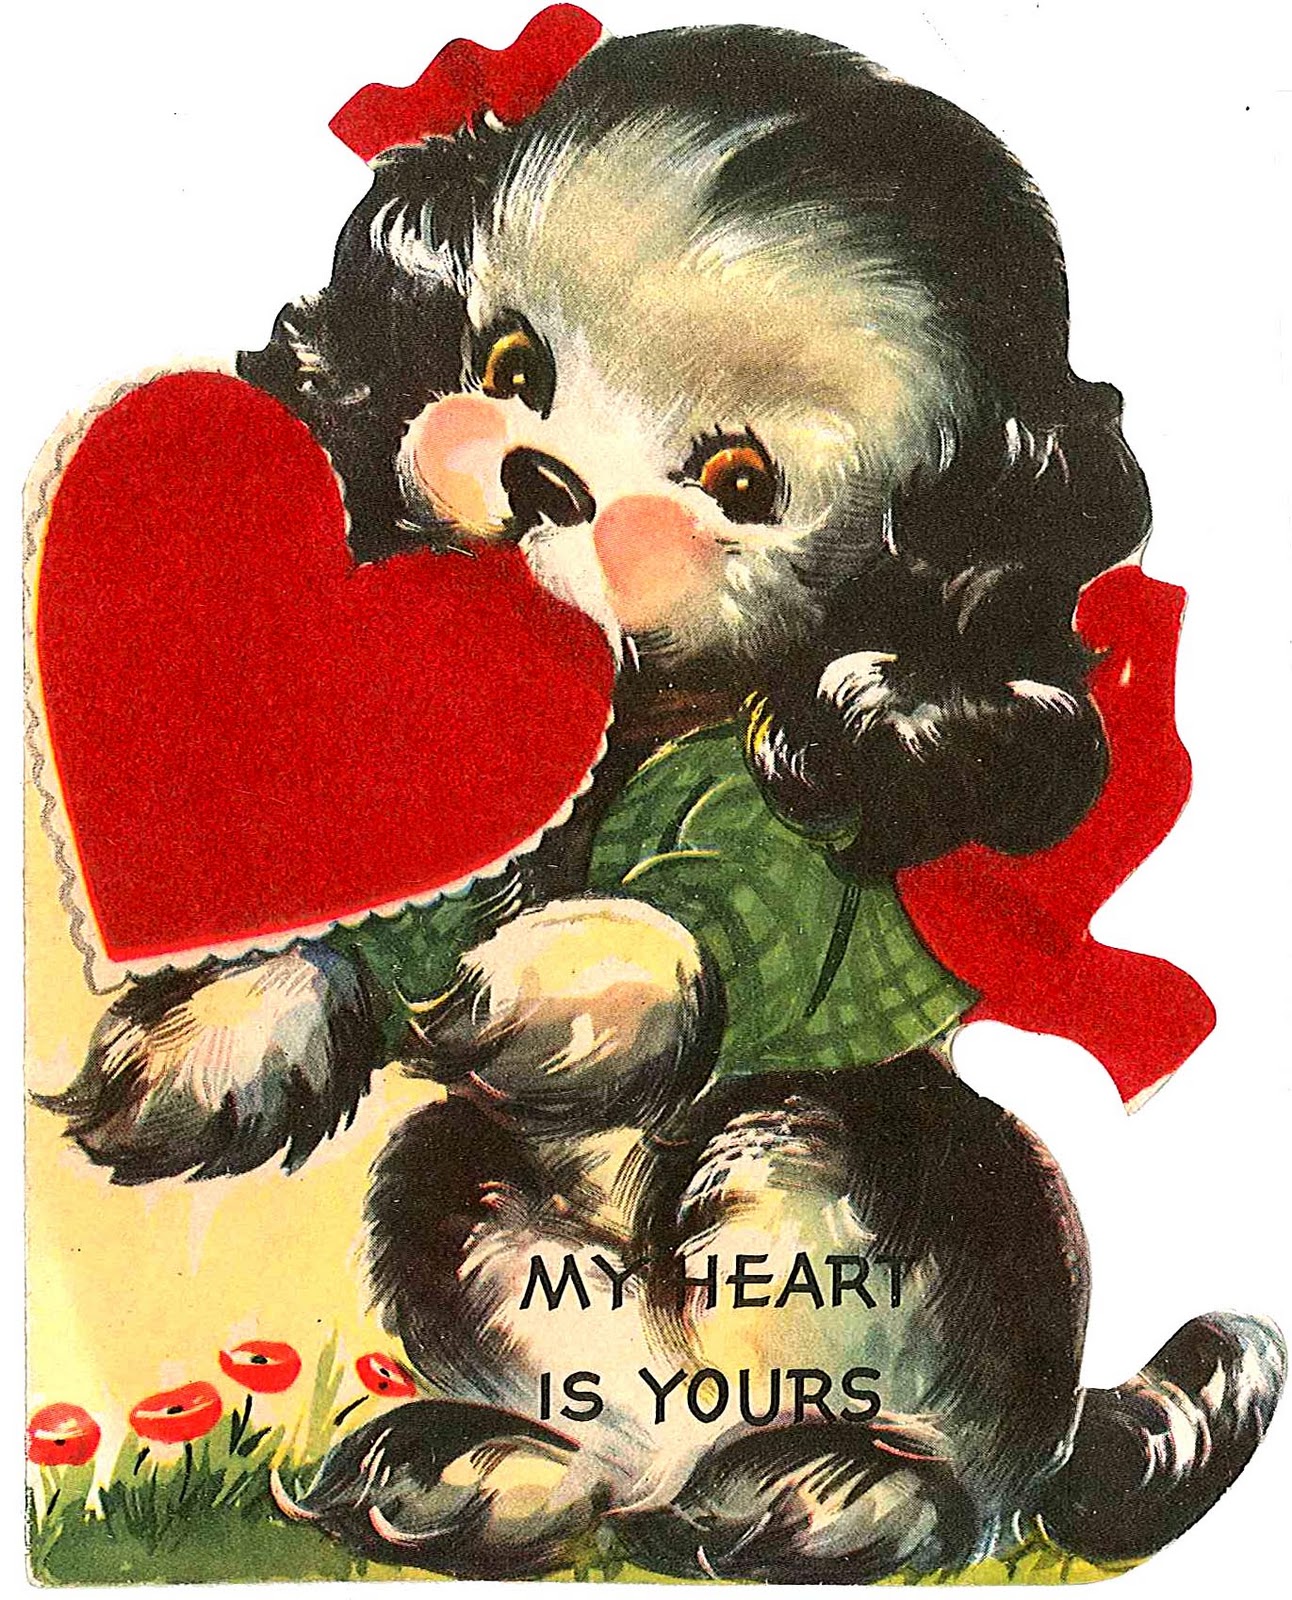 Vintage Valentine Cards Vintage Everyday